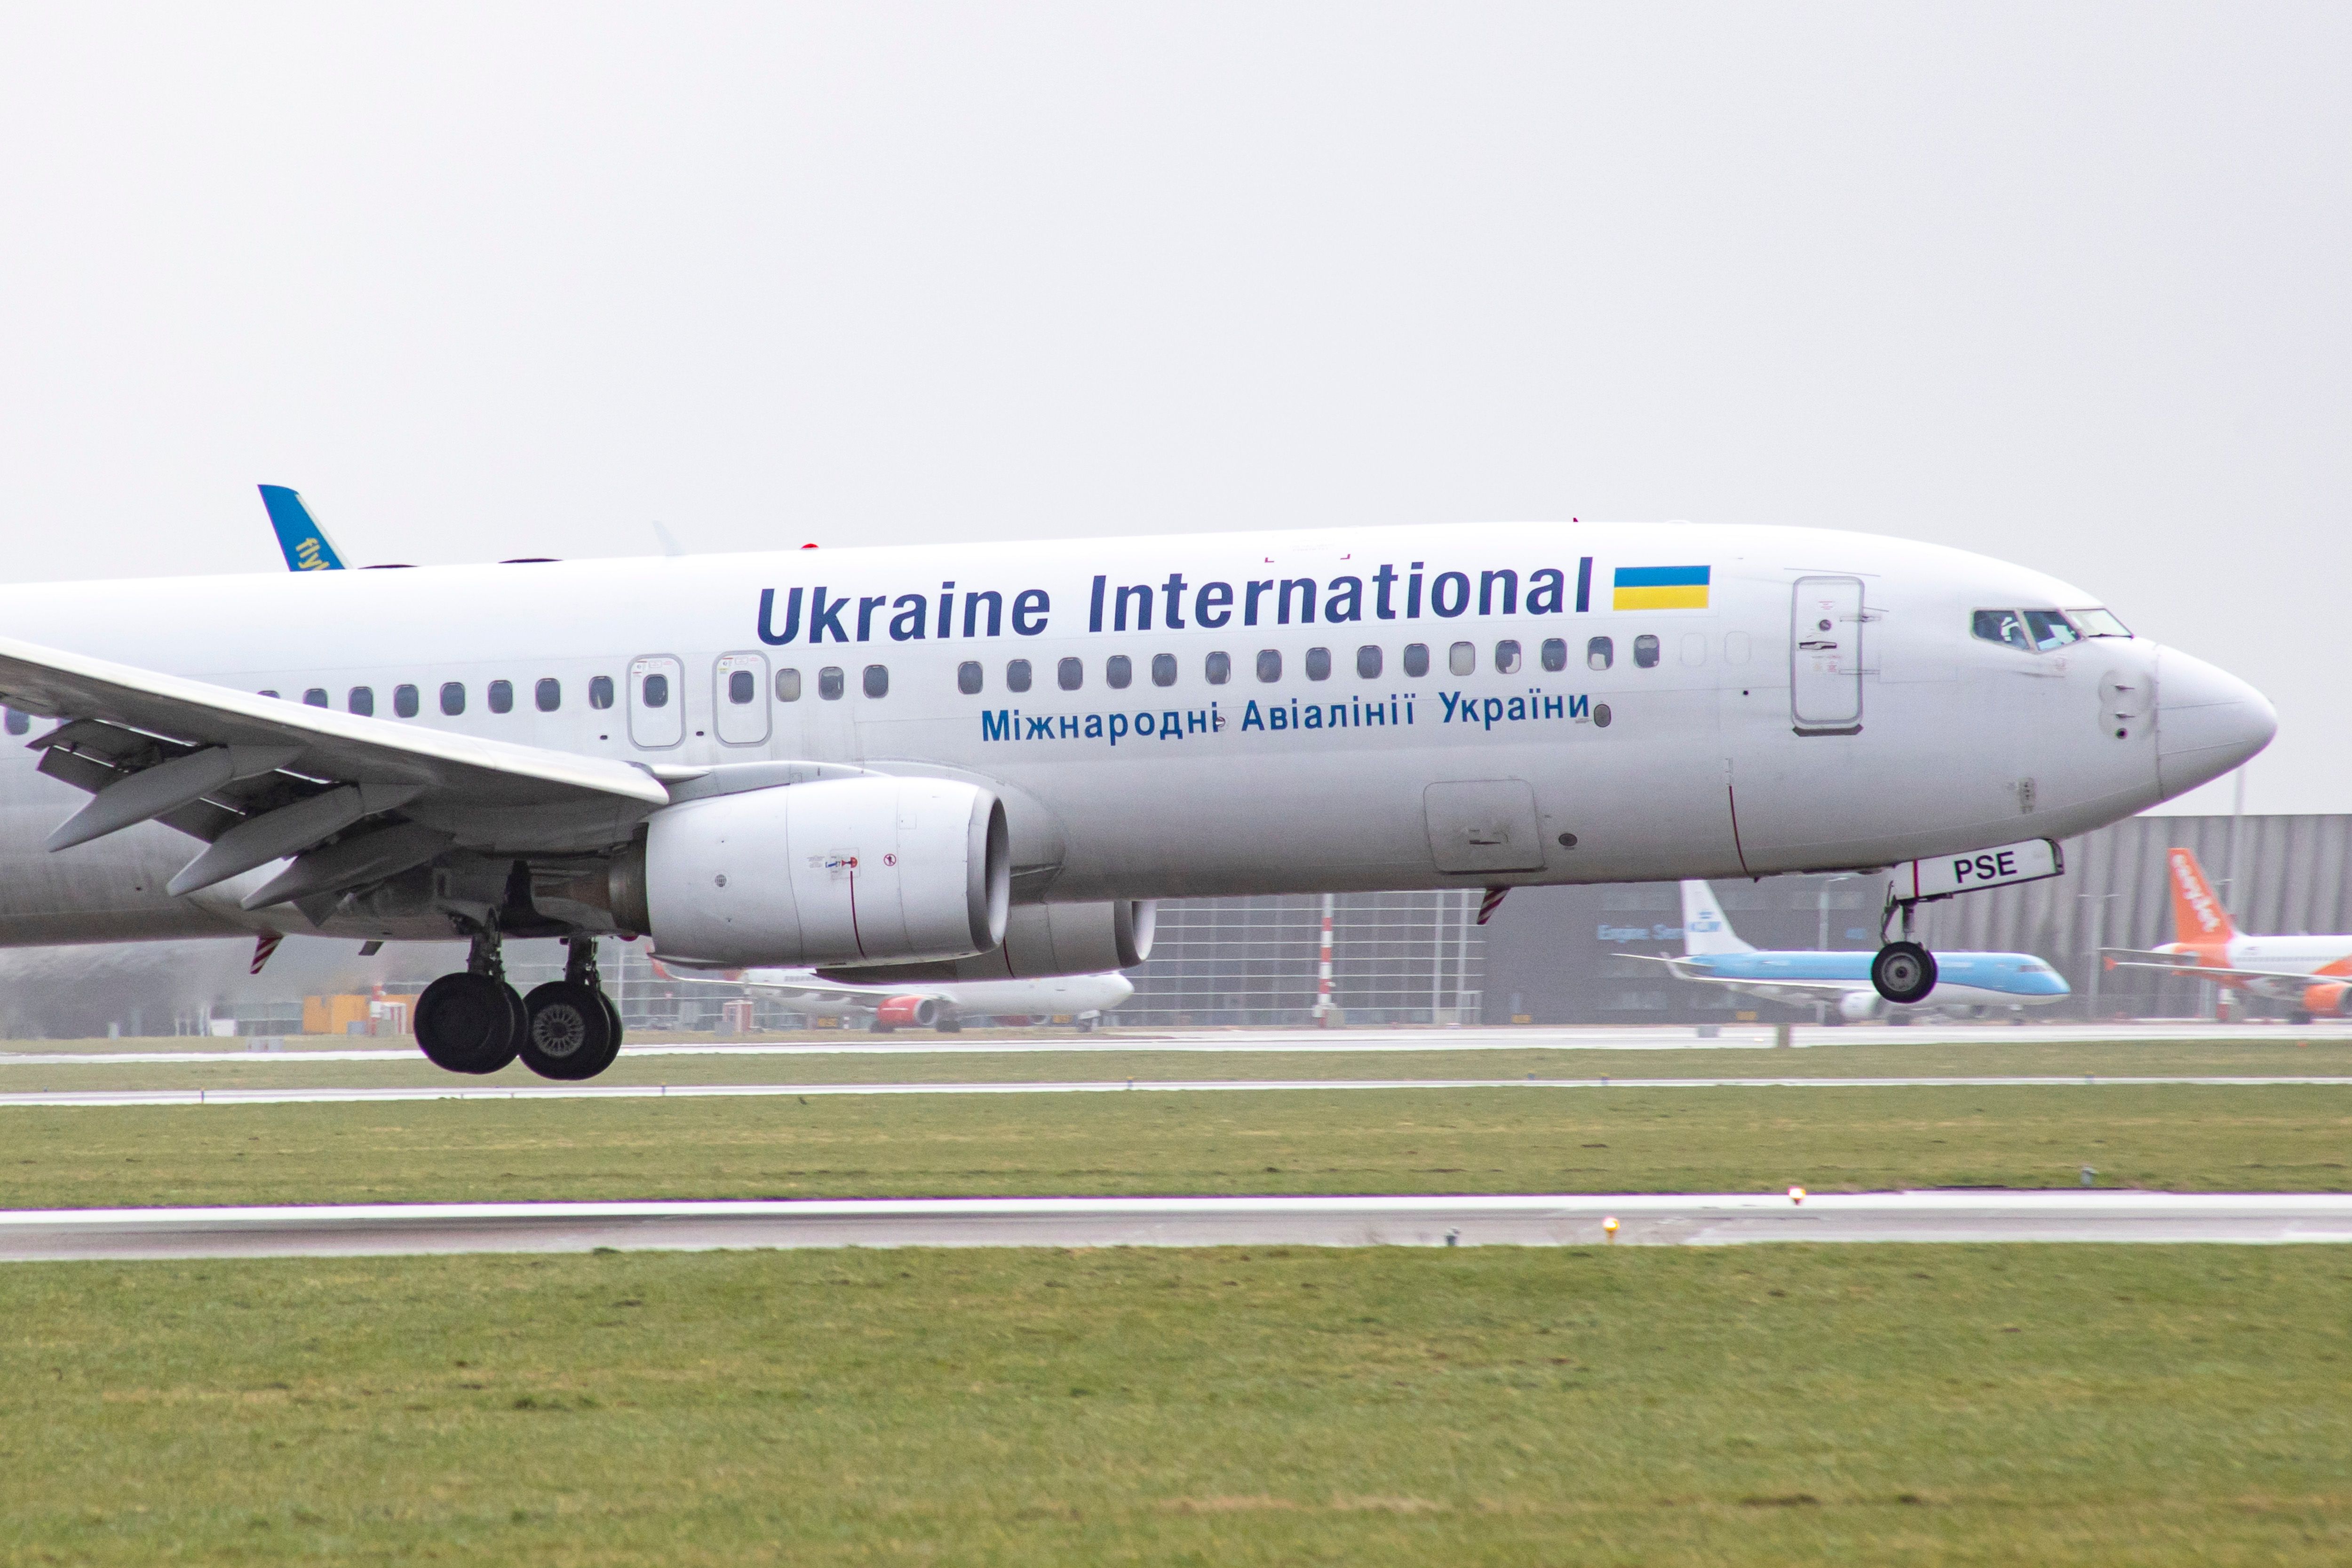 Ukraine International Aircraft 737-800 landing at Schiphol Airport 